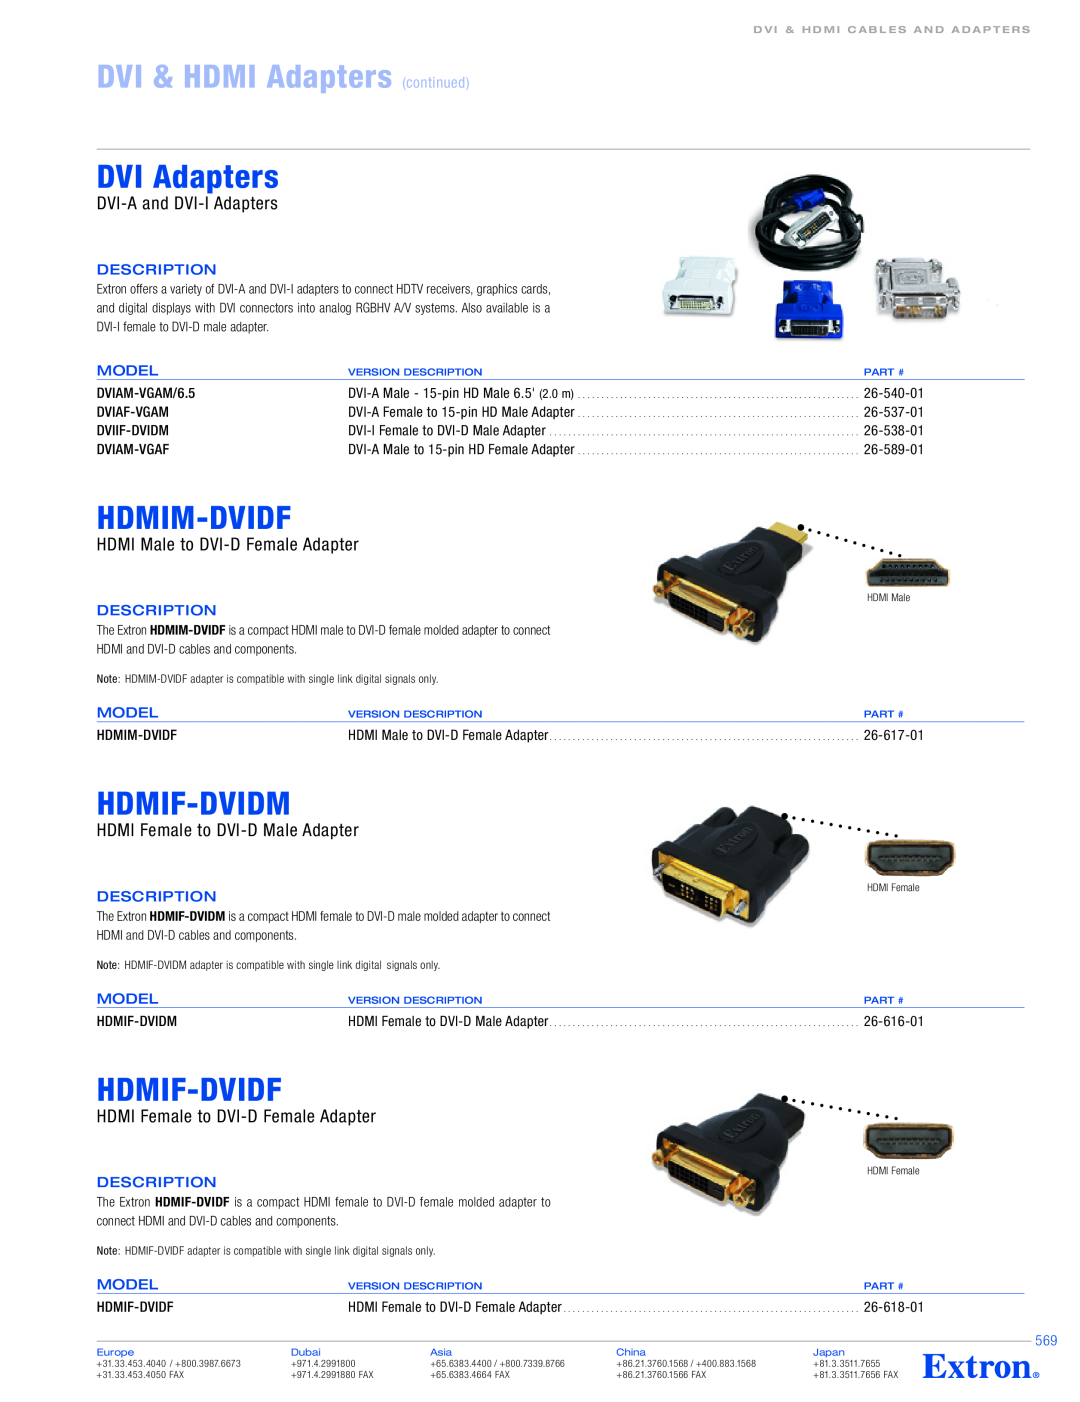 Extron electronic DVIAM-VGAF DVI Adapters, Hdmim-Dvidf, Hdmif-Dvidm, Hdmif-Dvidf, DVI-A and DVI-I Adapters, Description 